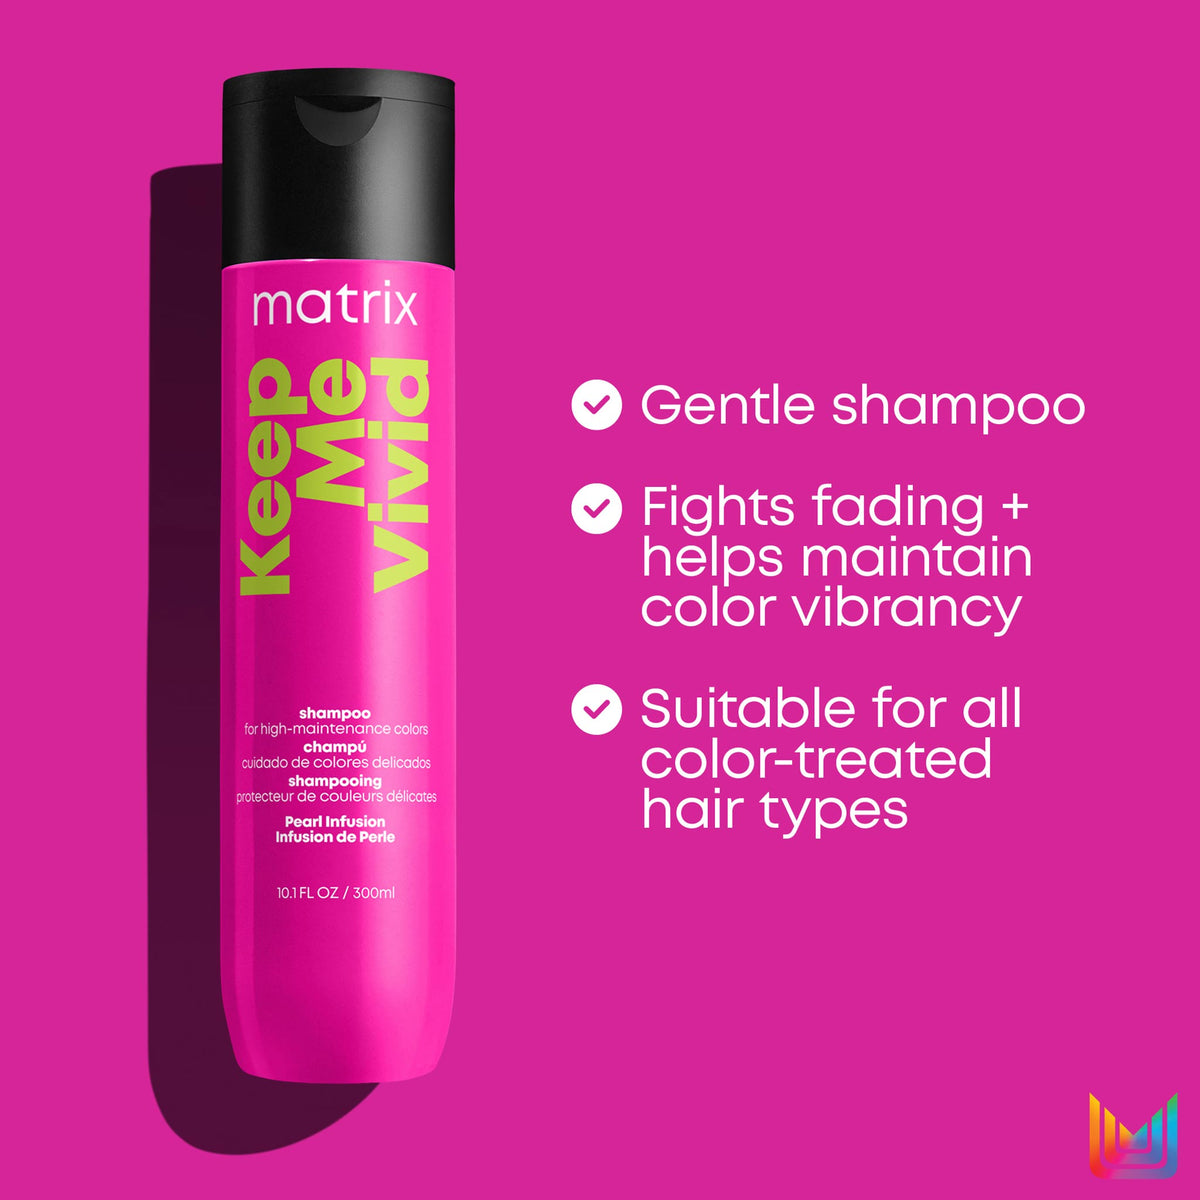 Matrix Keep Me Vivid Sulfate Free Shampoo 300ml